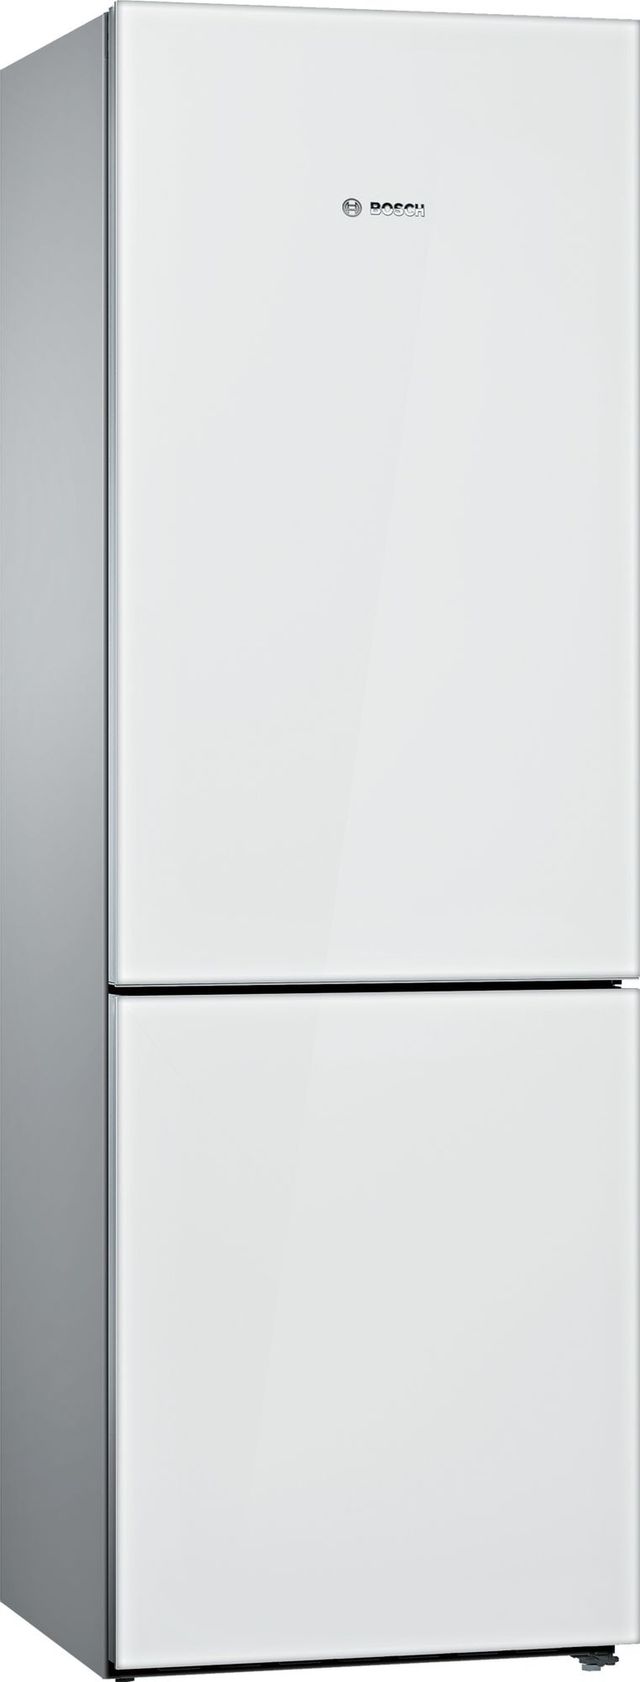 Bosch® 800 Series 10.0 Cu. Ft. White Counter Depth Bottom Freezer Refrigerator 0